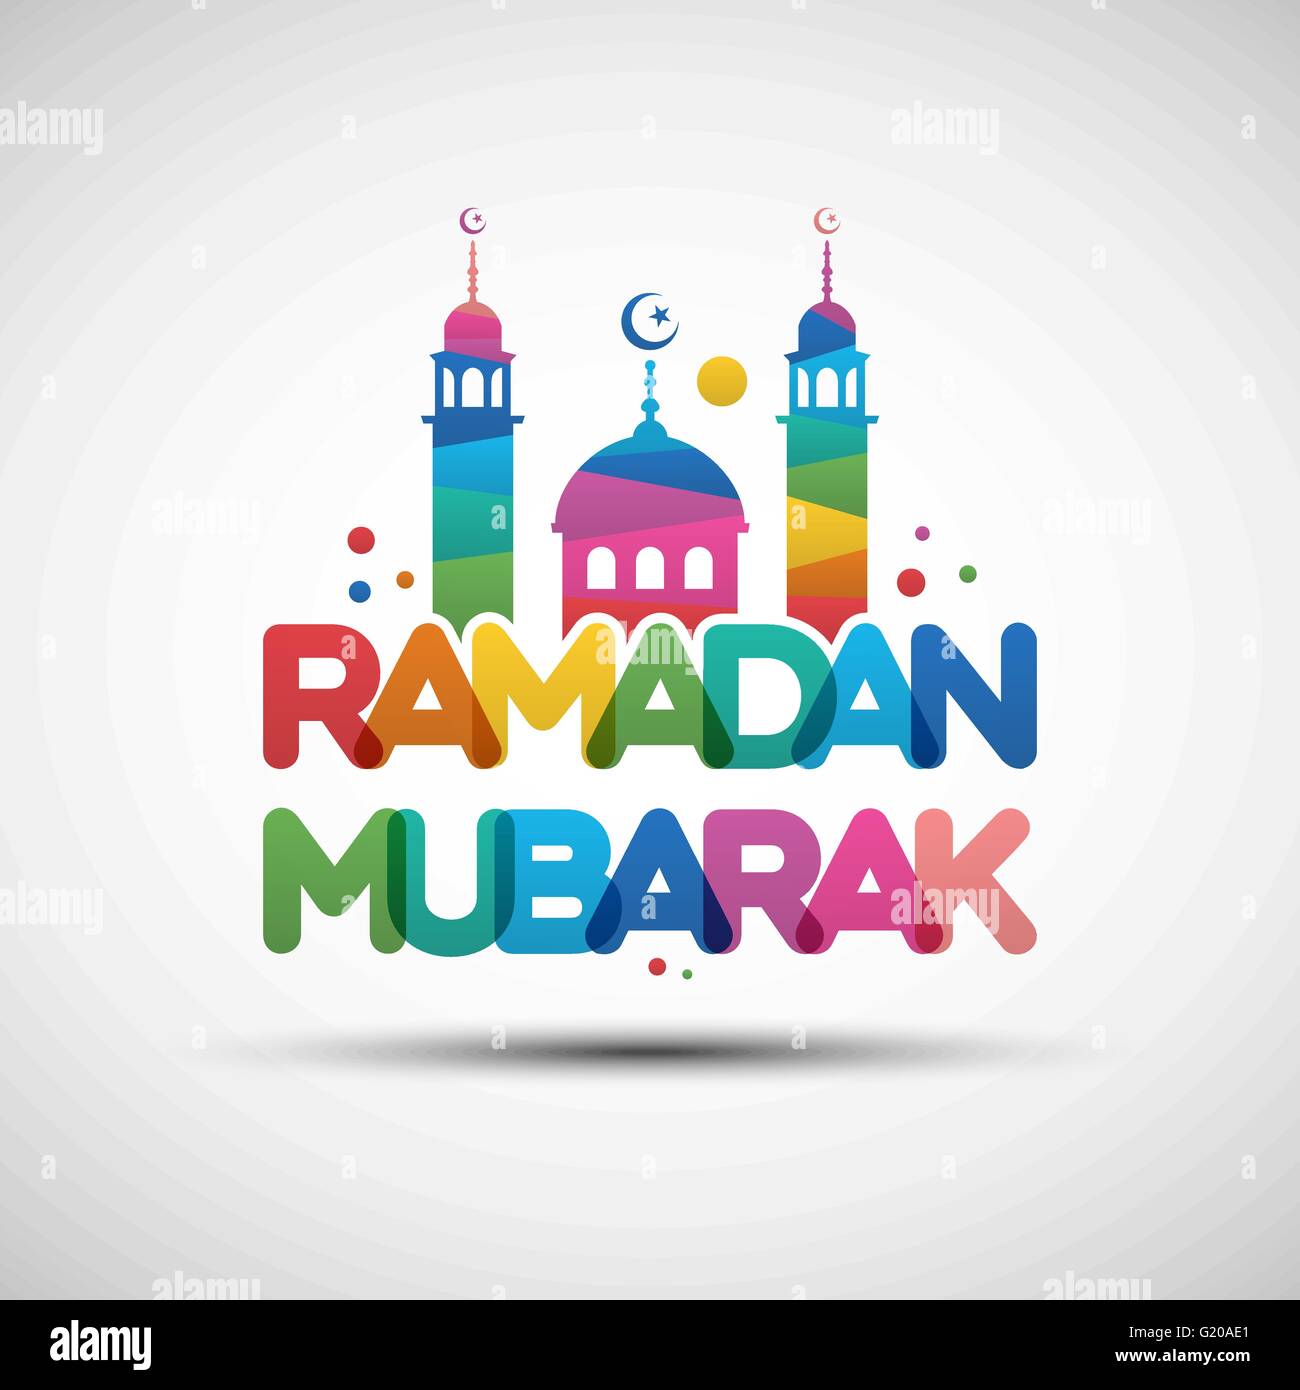 Vector Illustration of Ramadan Mubarak. Greeting card design with creative multicolored transparent text Stock Vector